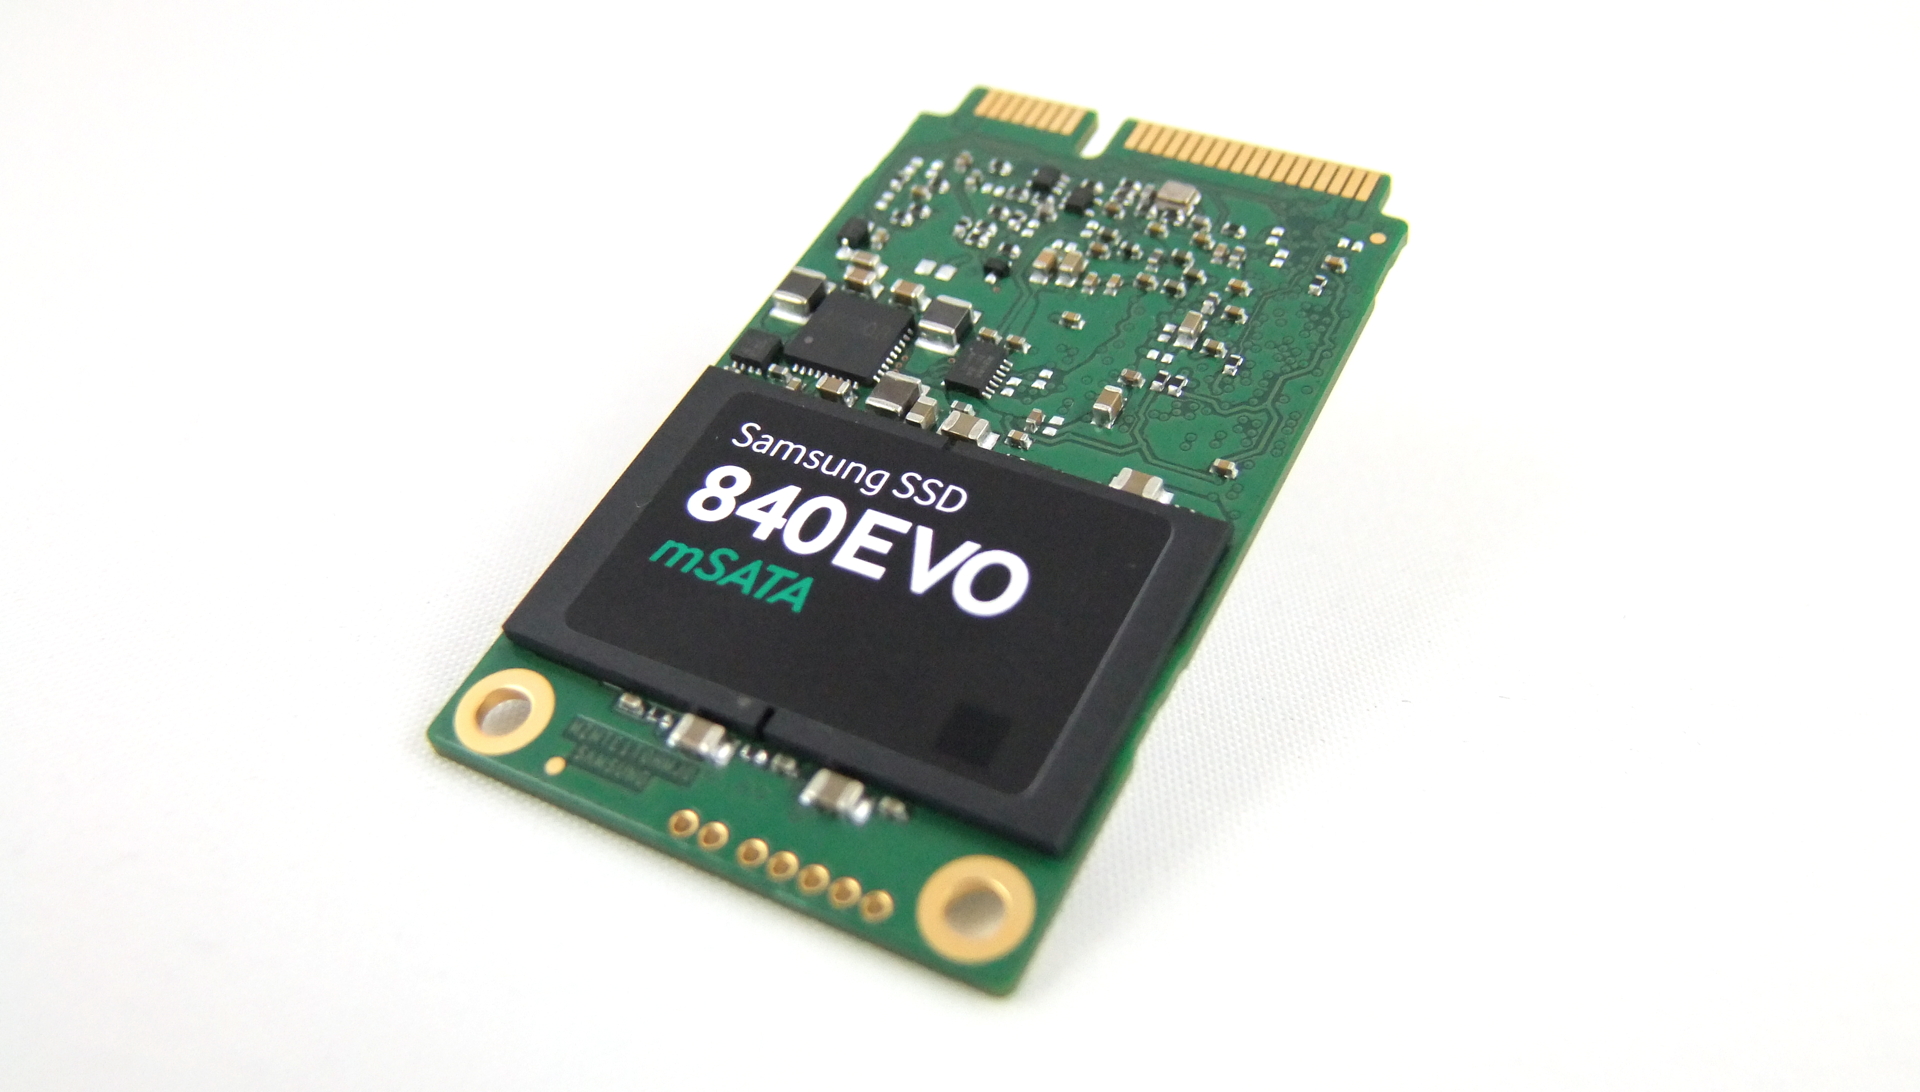 840 EVO mSATA 500GB SSD review PC Gamer